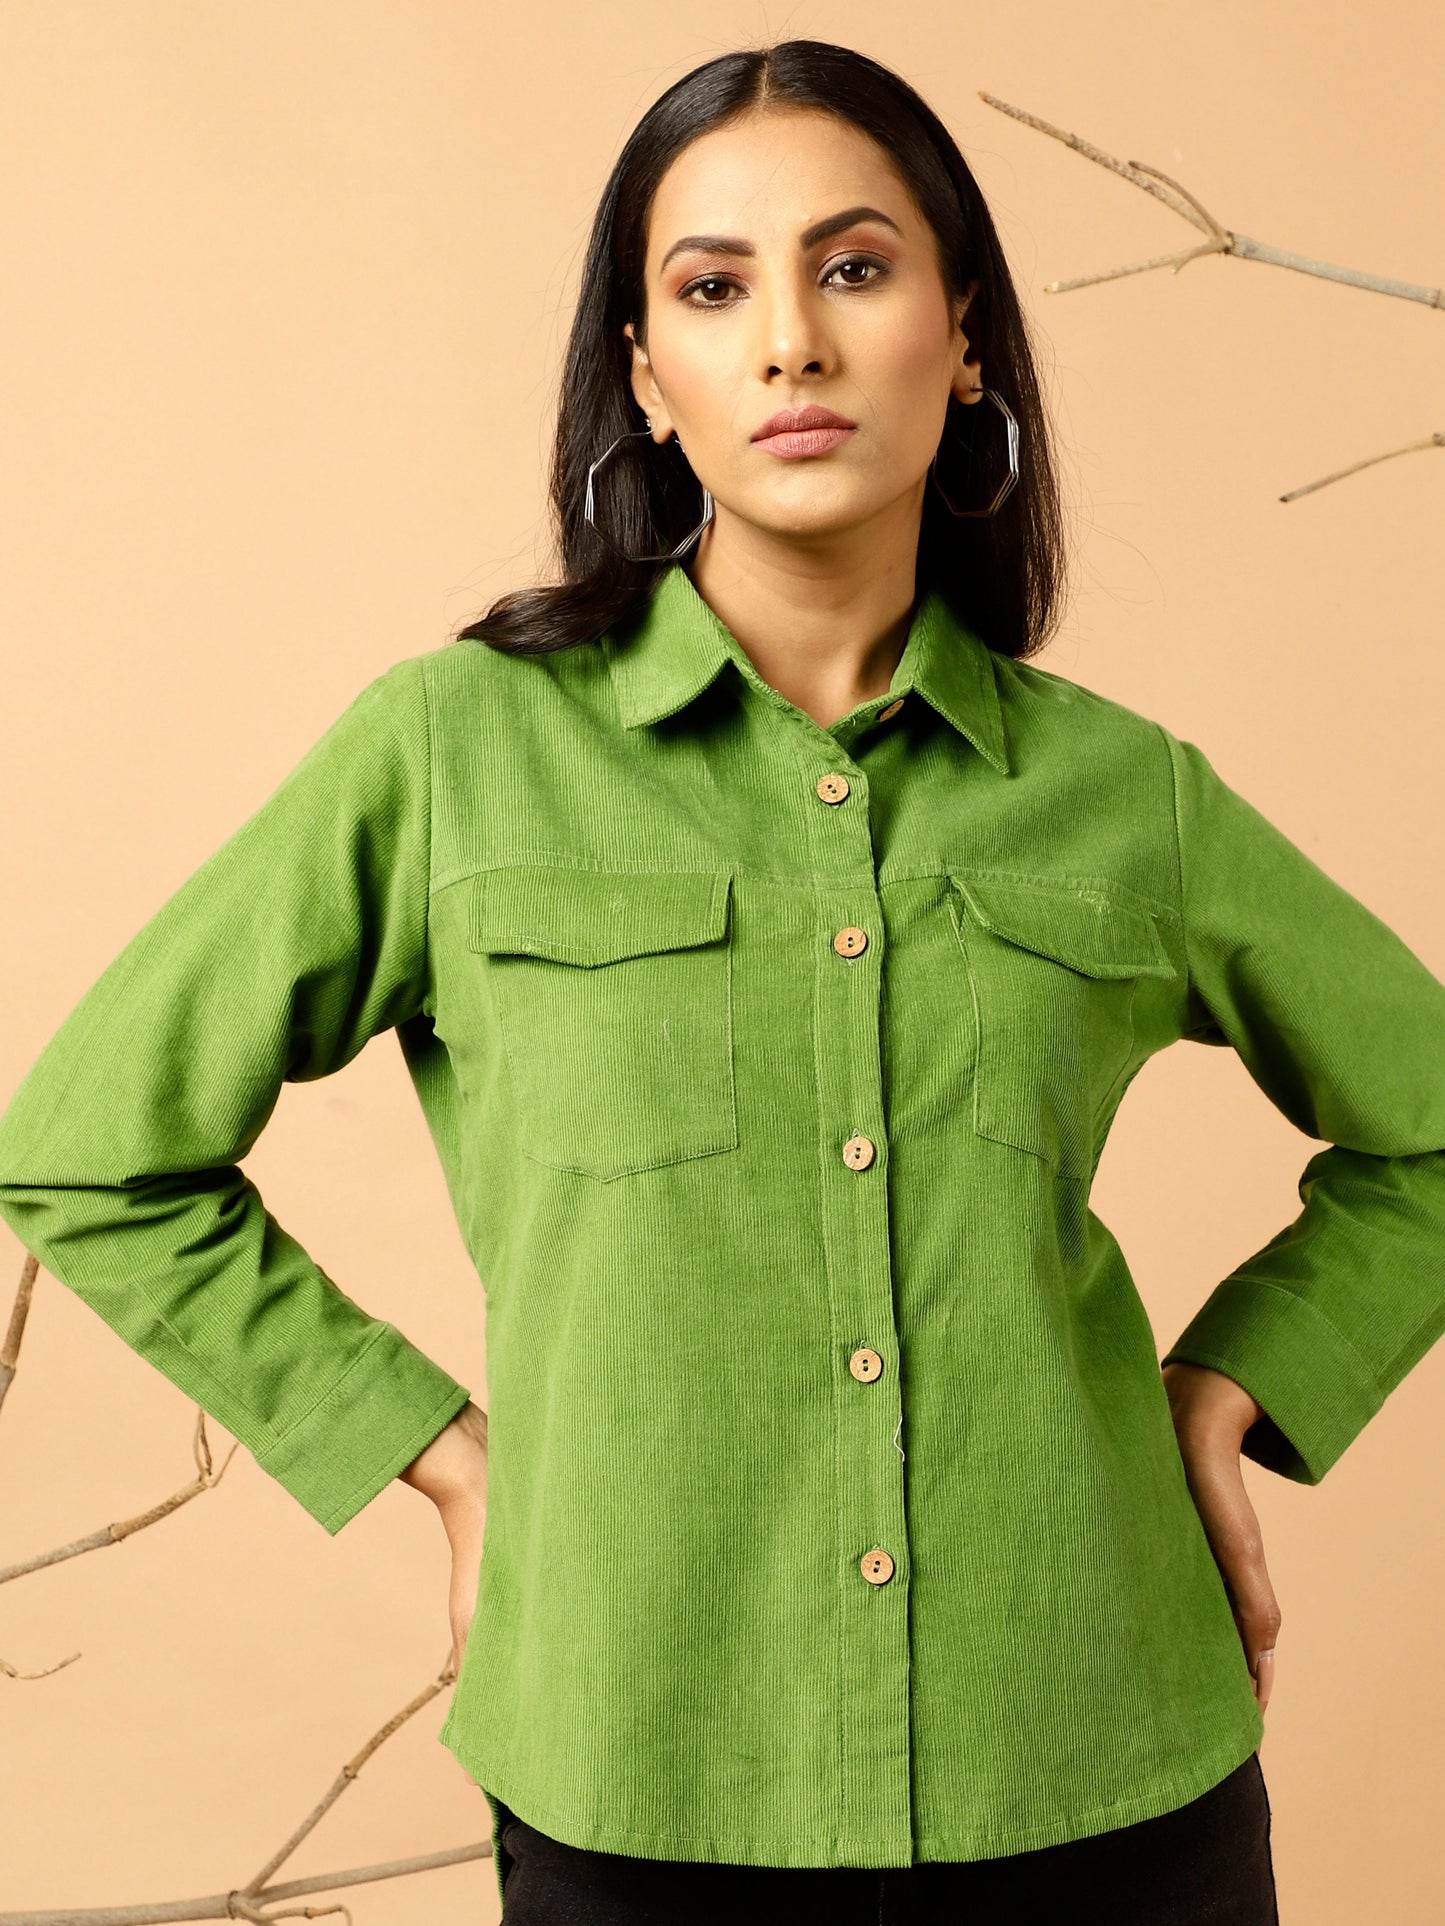 Green Corduroy Shirt